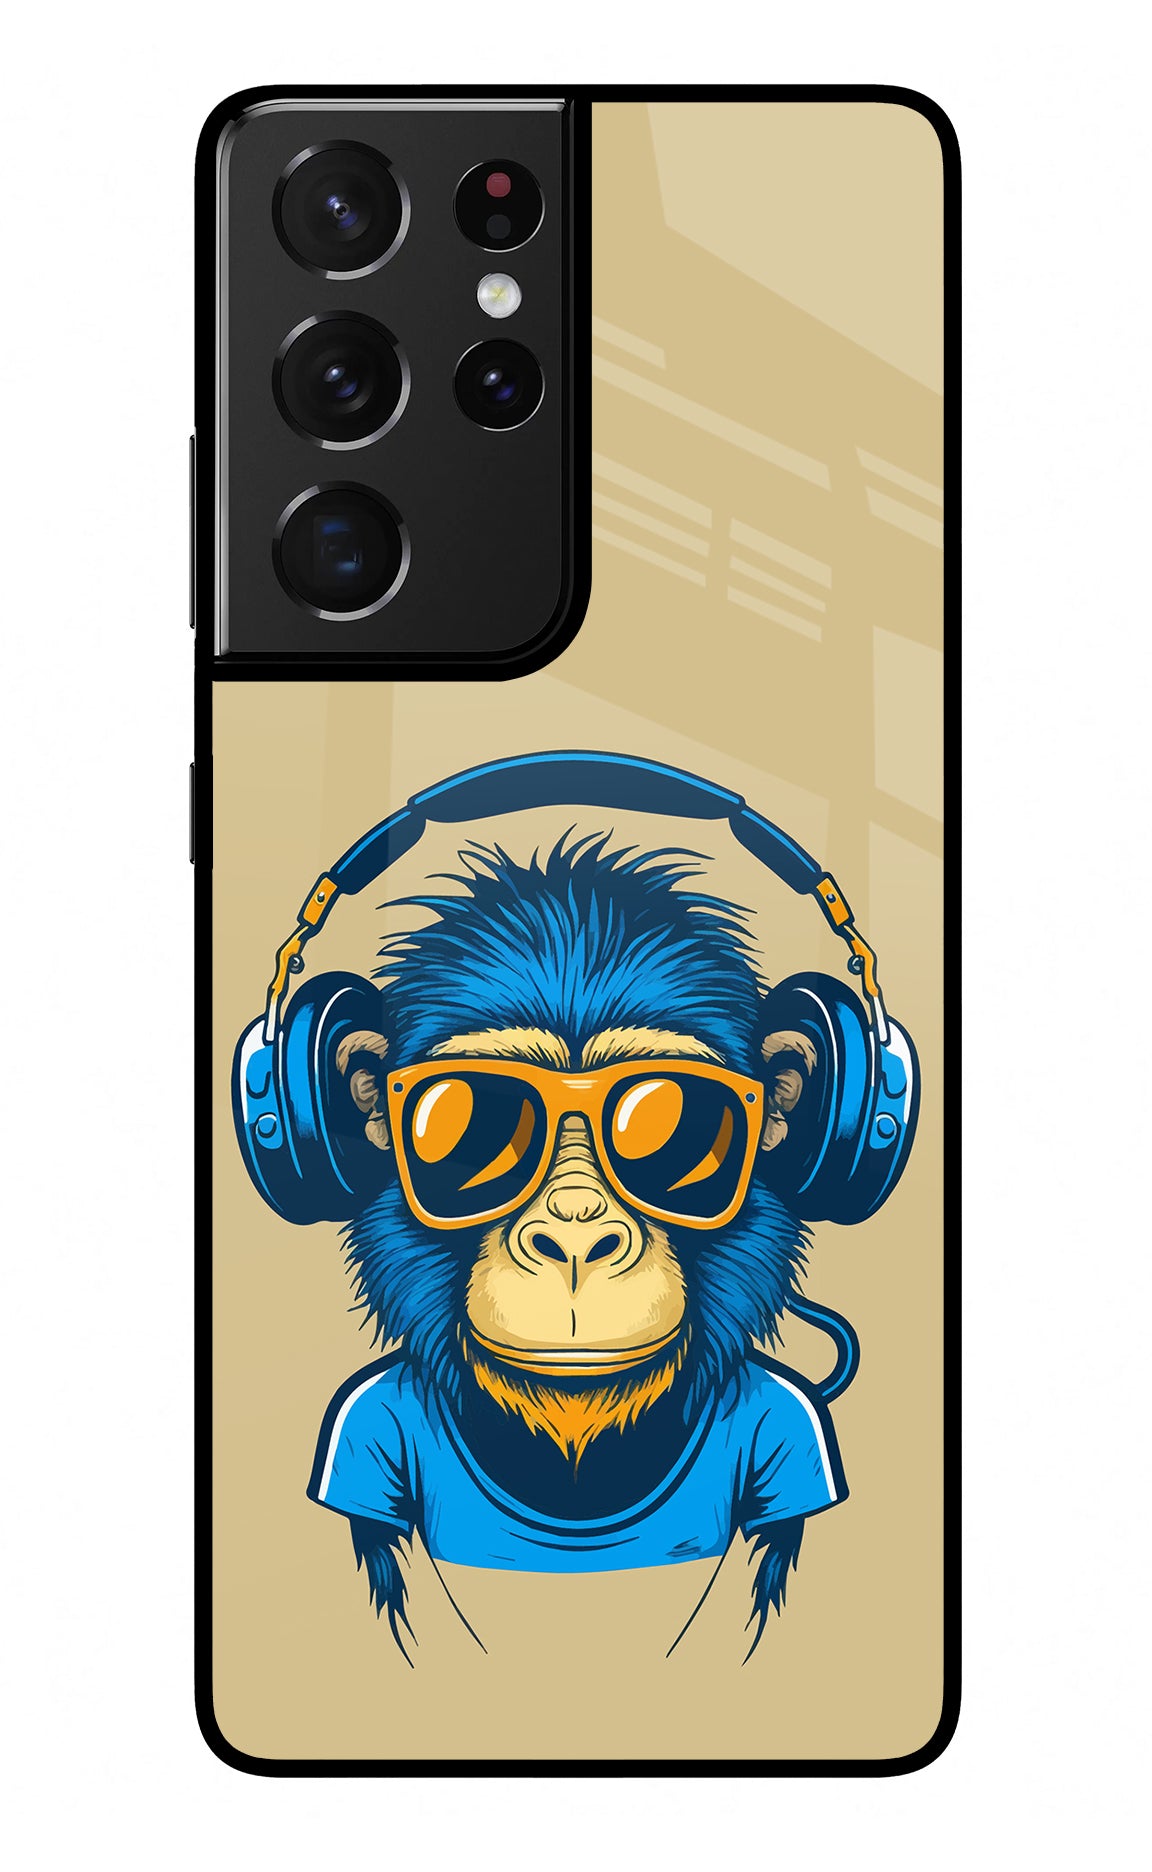 Monkey Headphone Samsung S21 Ultra Back Cover